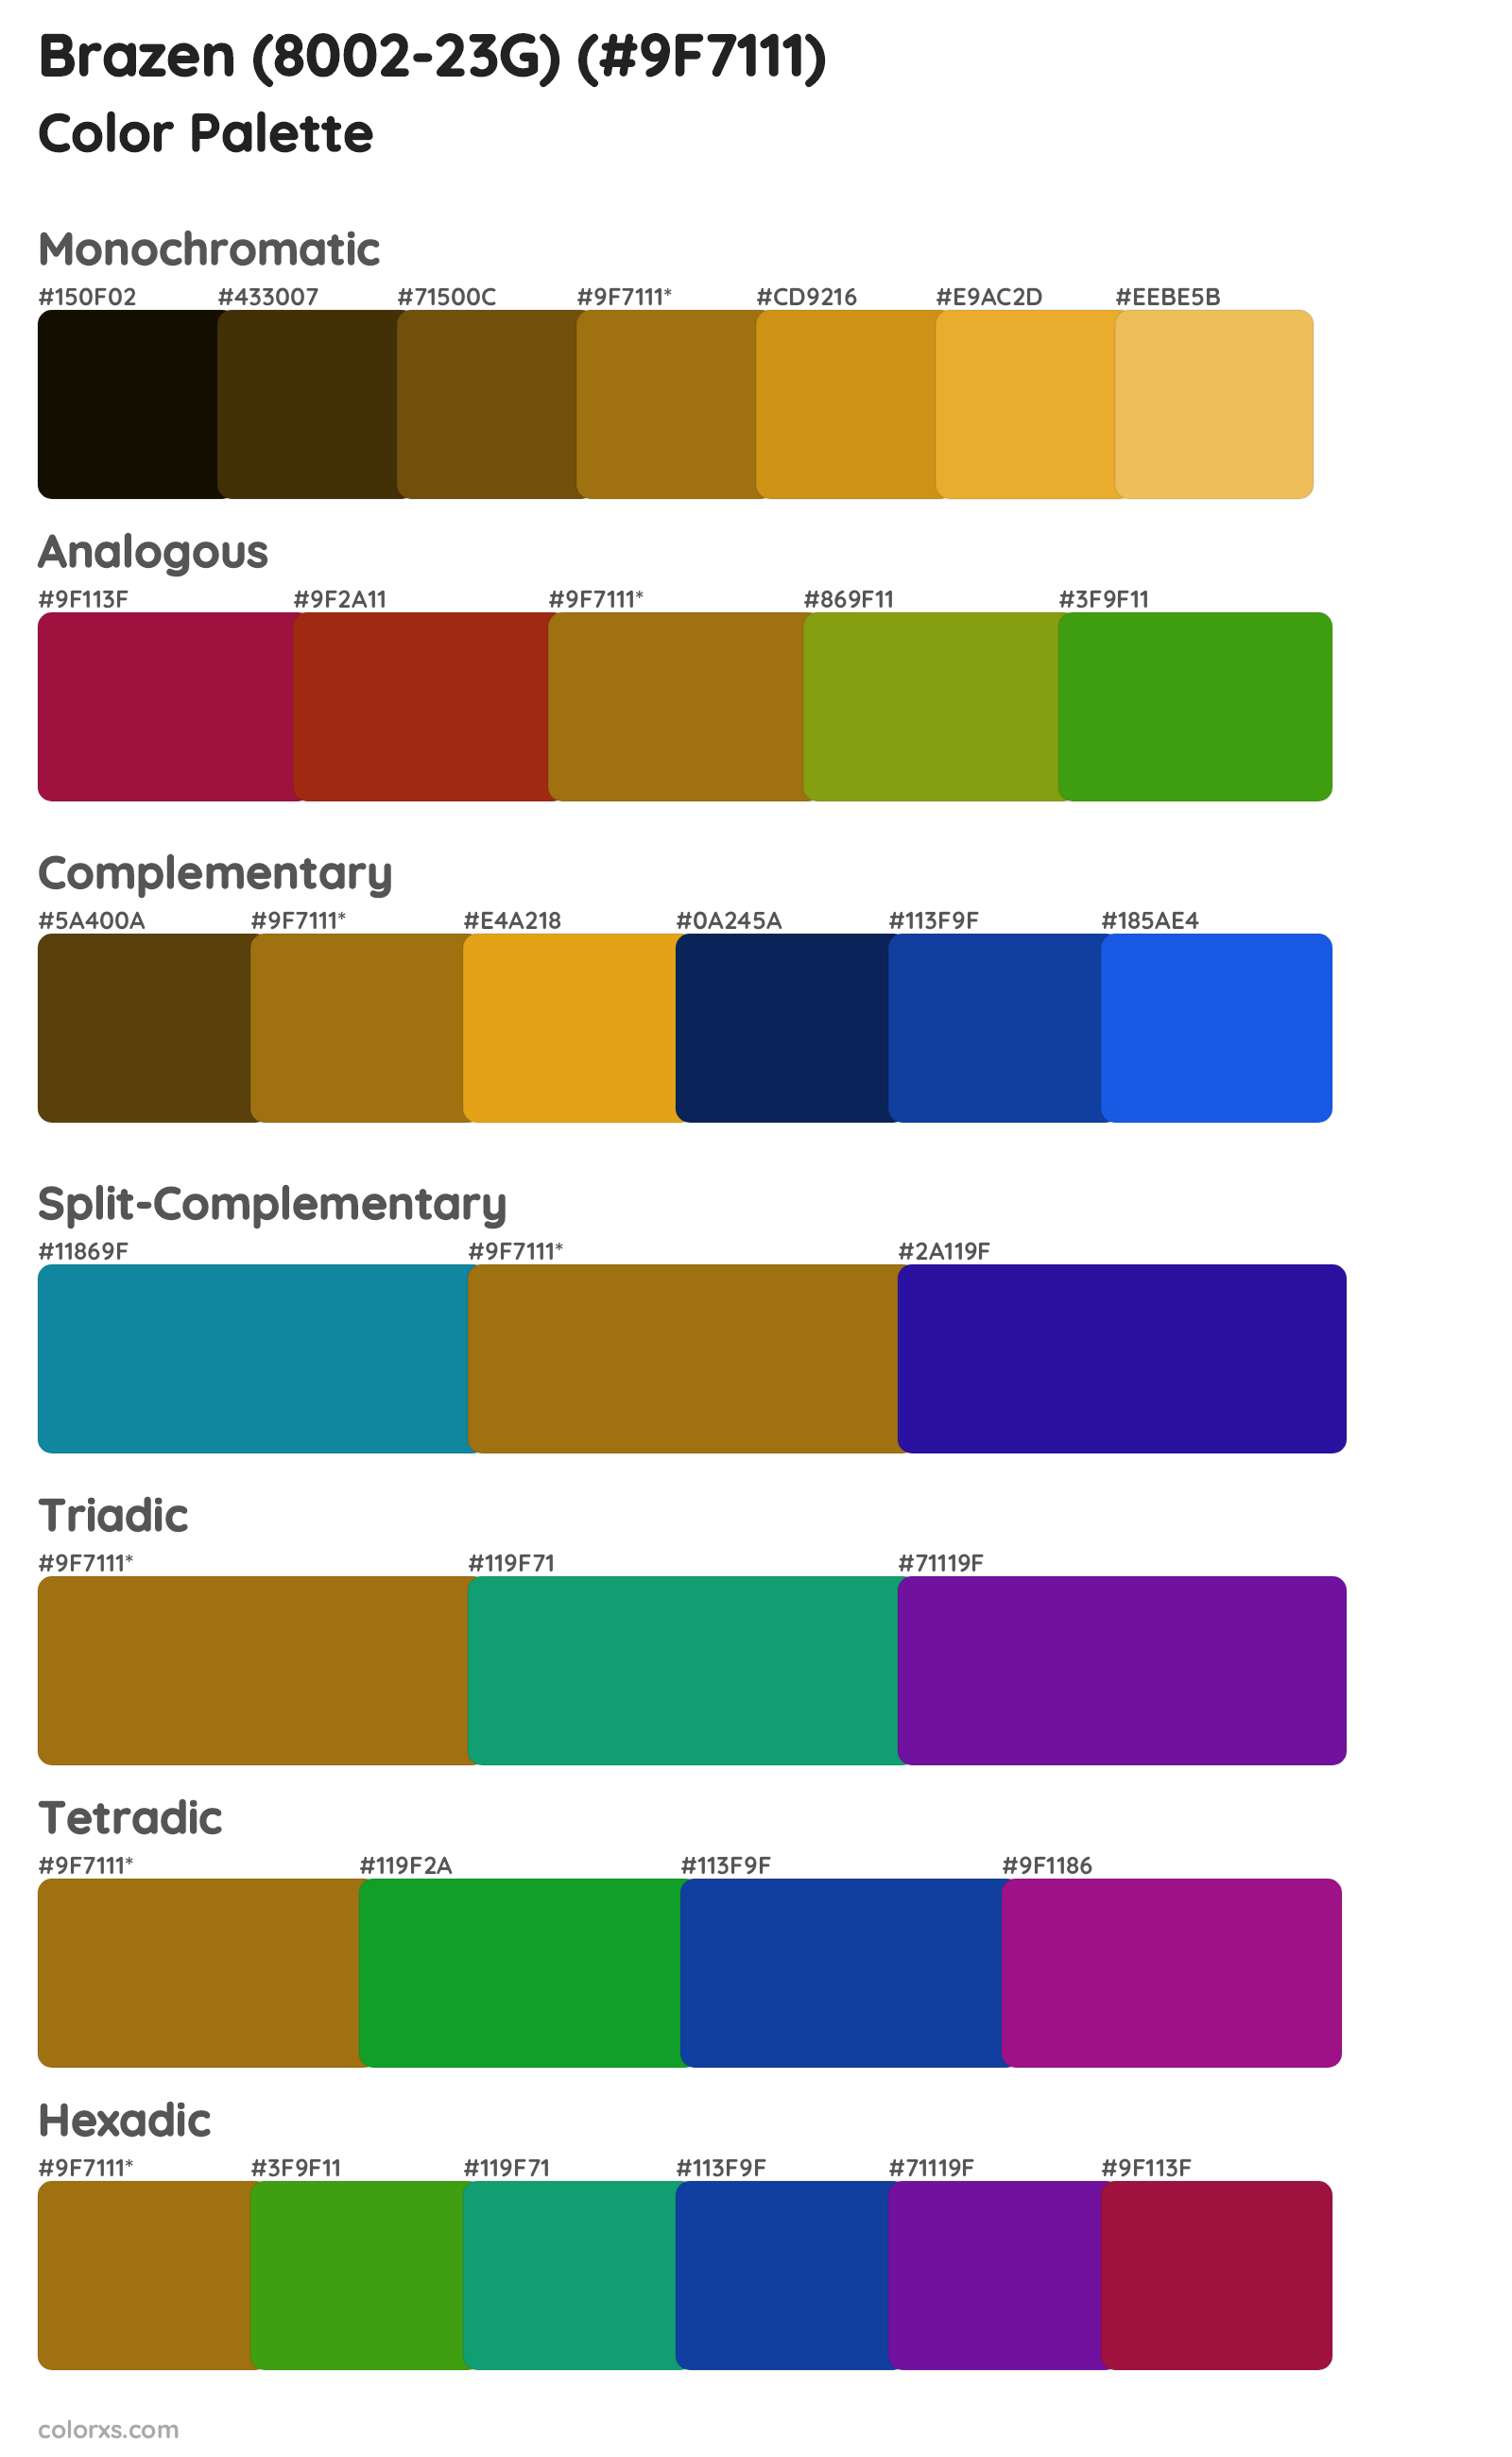 Brazen (8002-23G) Color Scheme Palettes